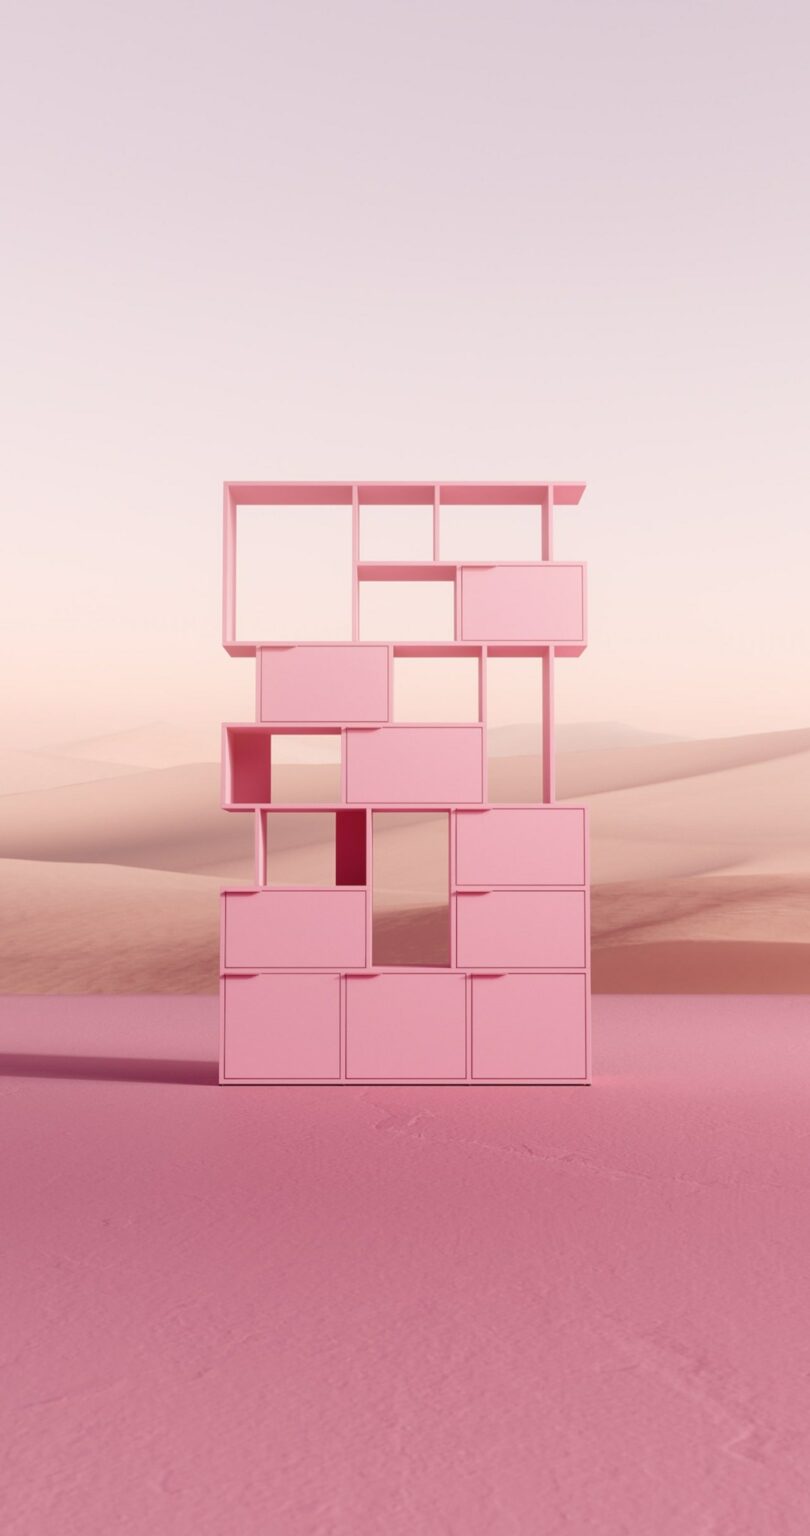 A modular pink shelf against a desert landscape at dusk.